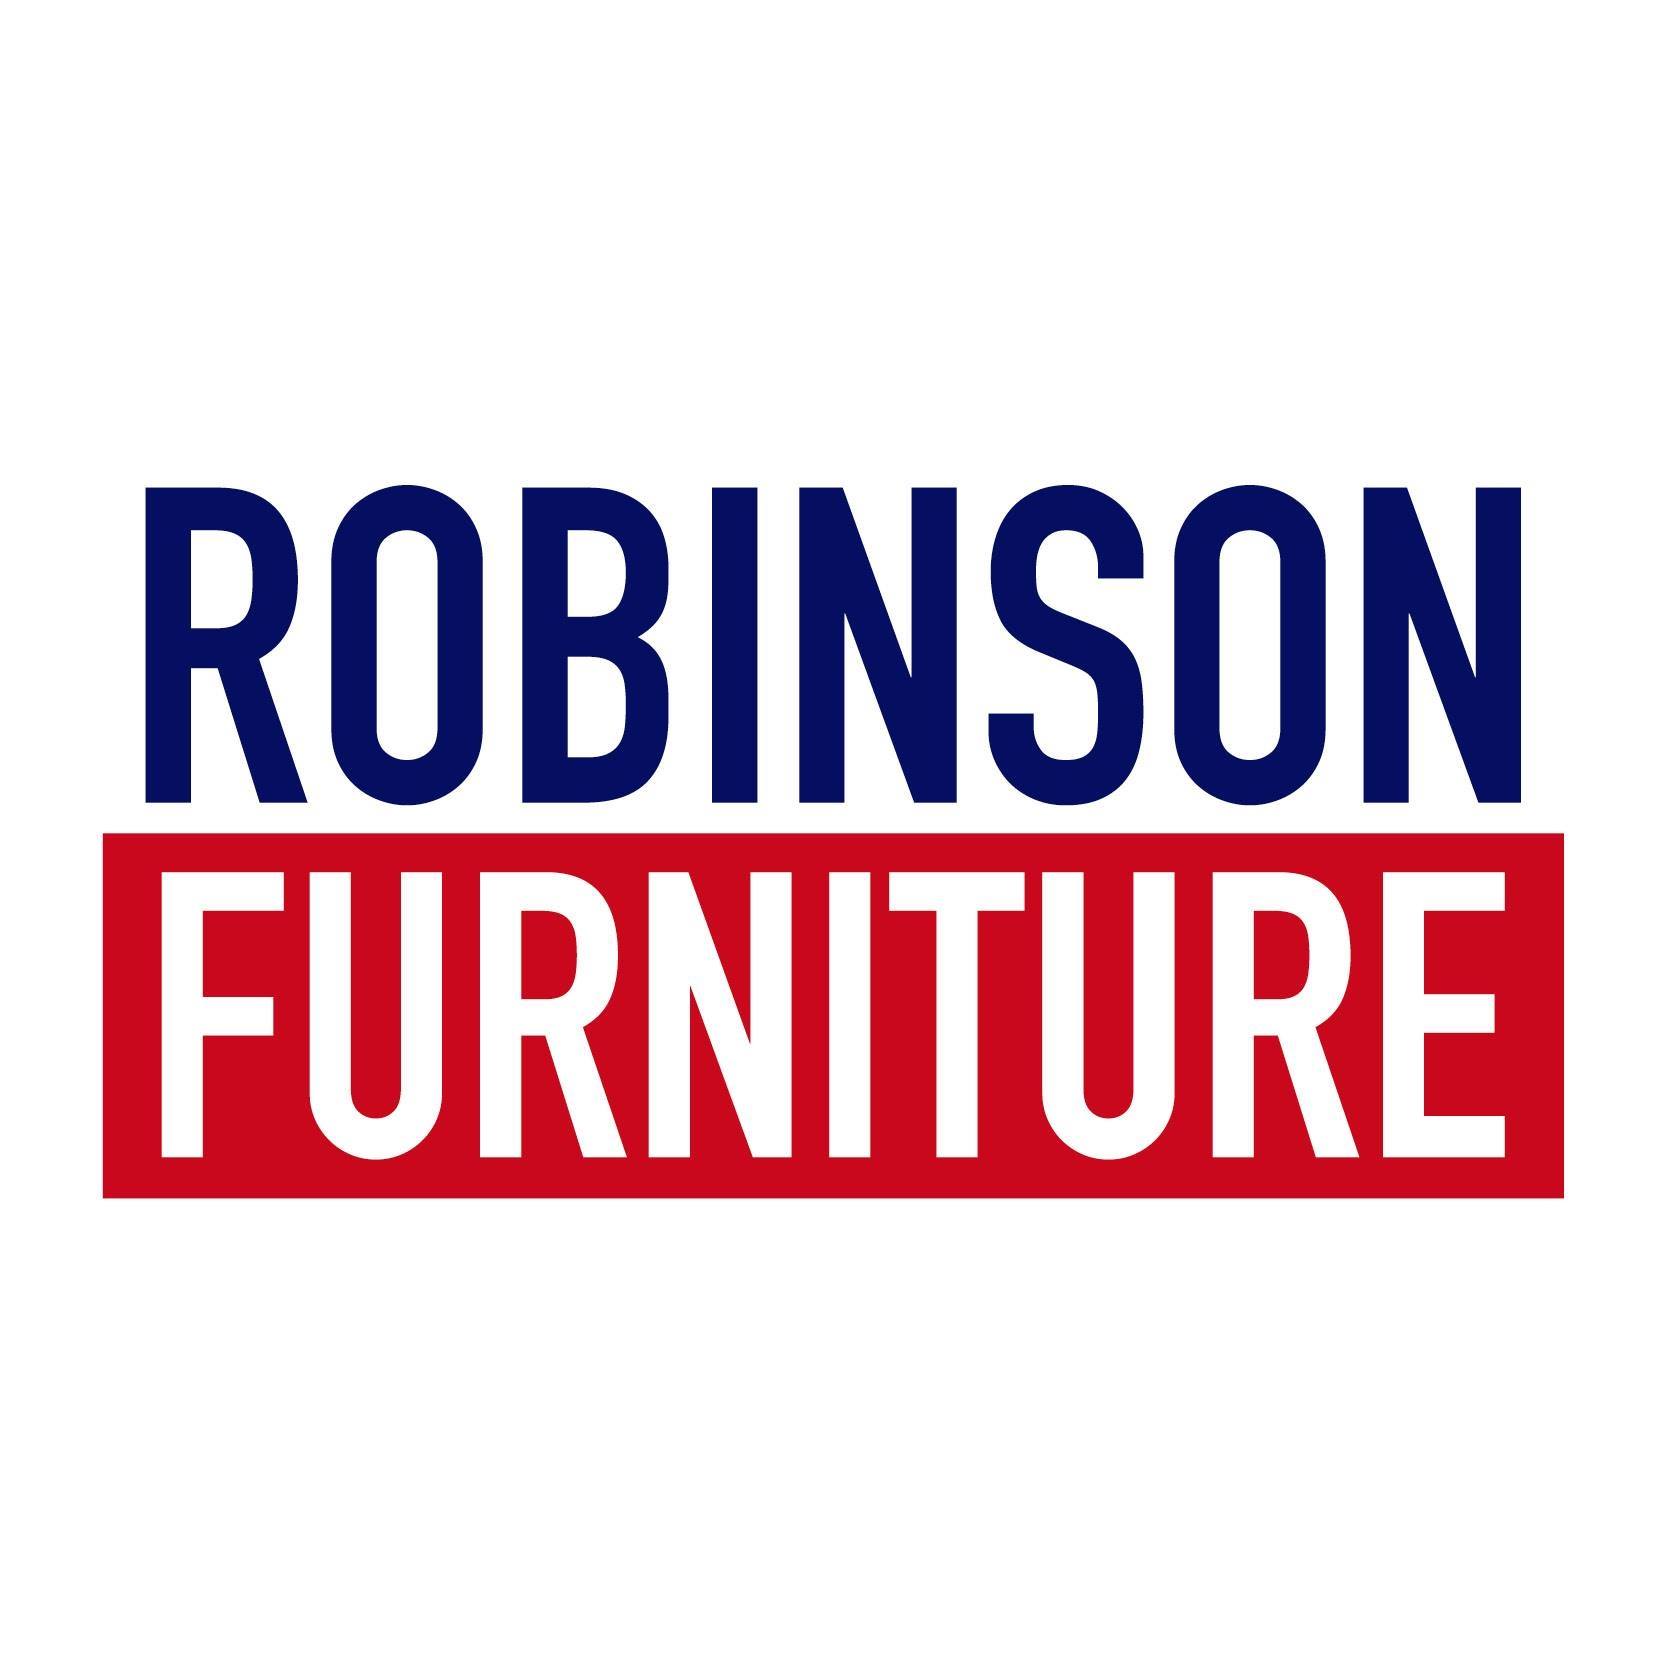 Robinson Furniture